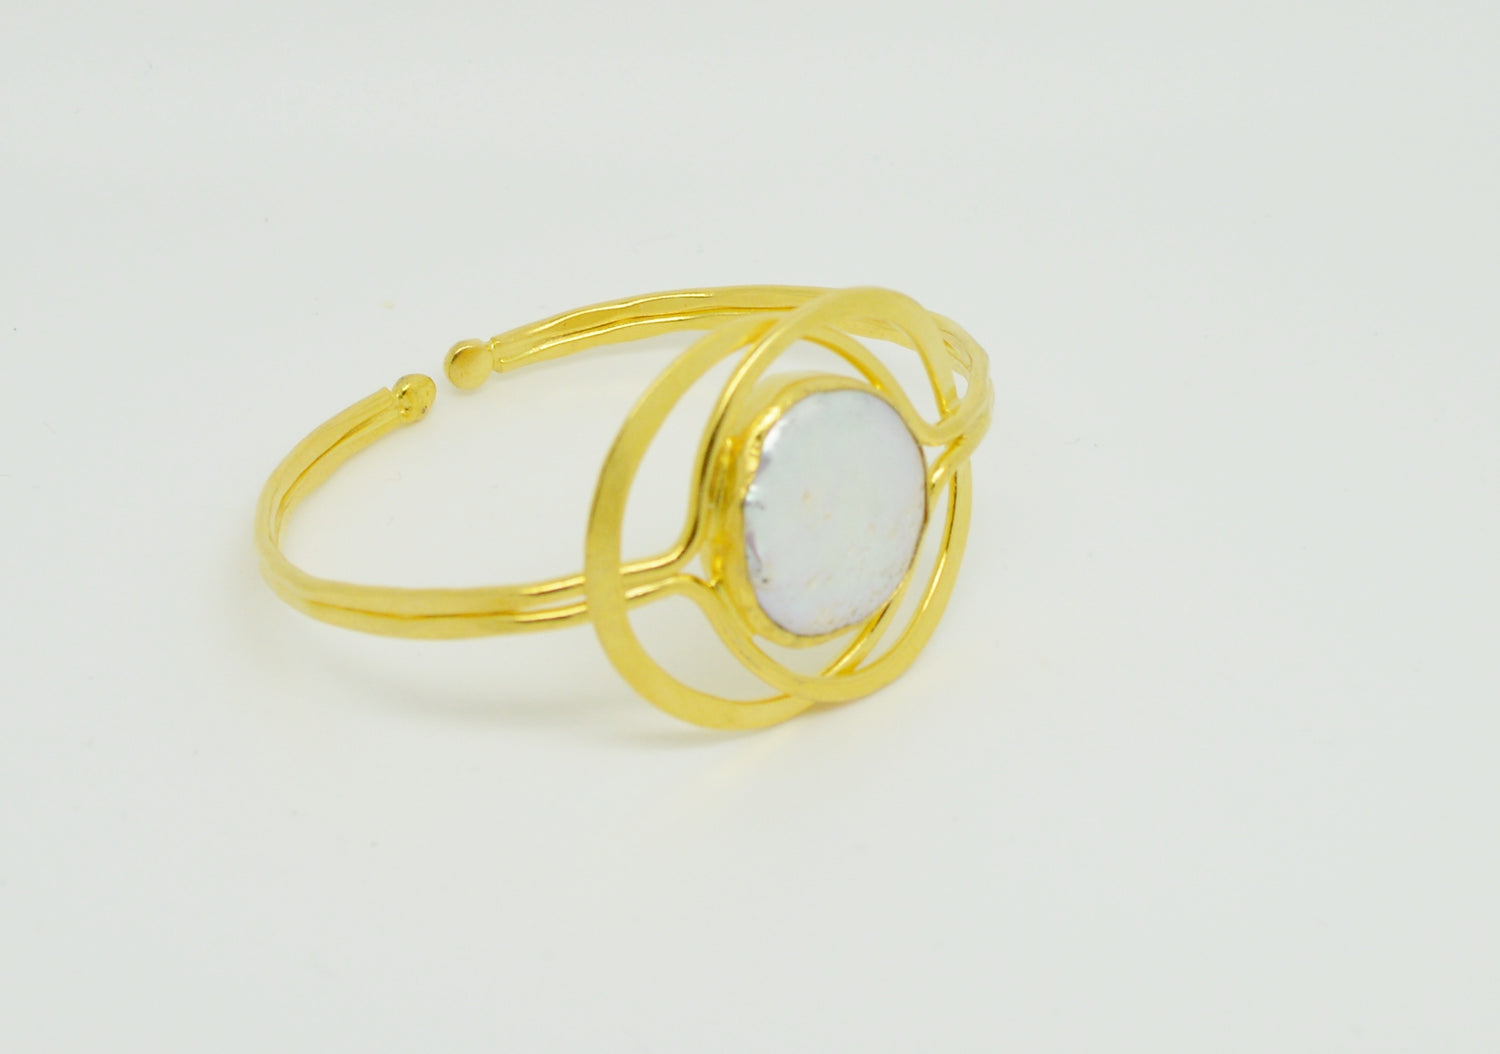 Aylas Pearl cuff/bracelet - Gold plated semi precious gemstone - Handmade in Ottoman Style